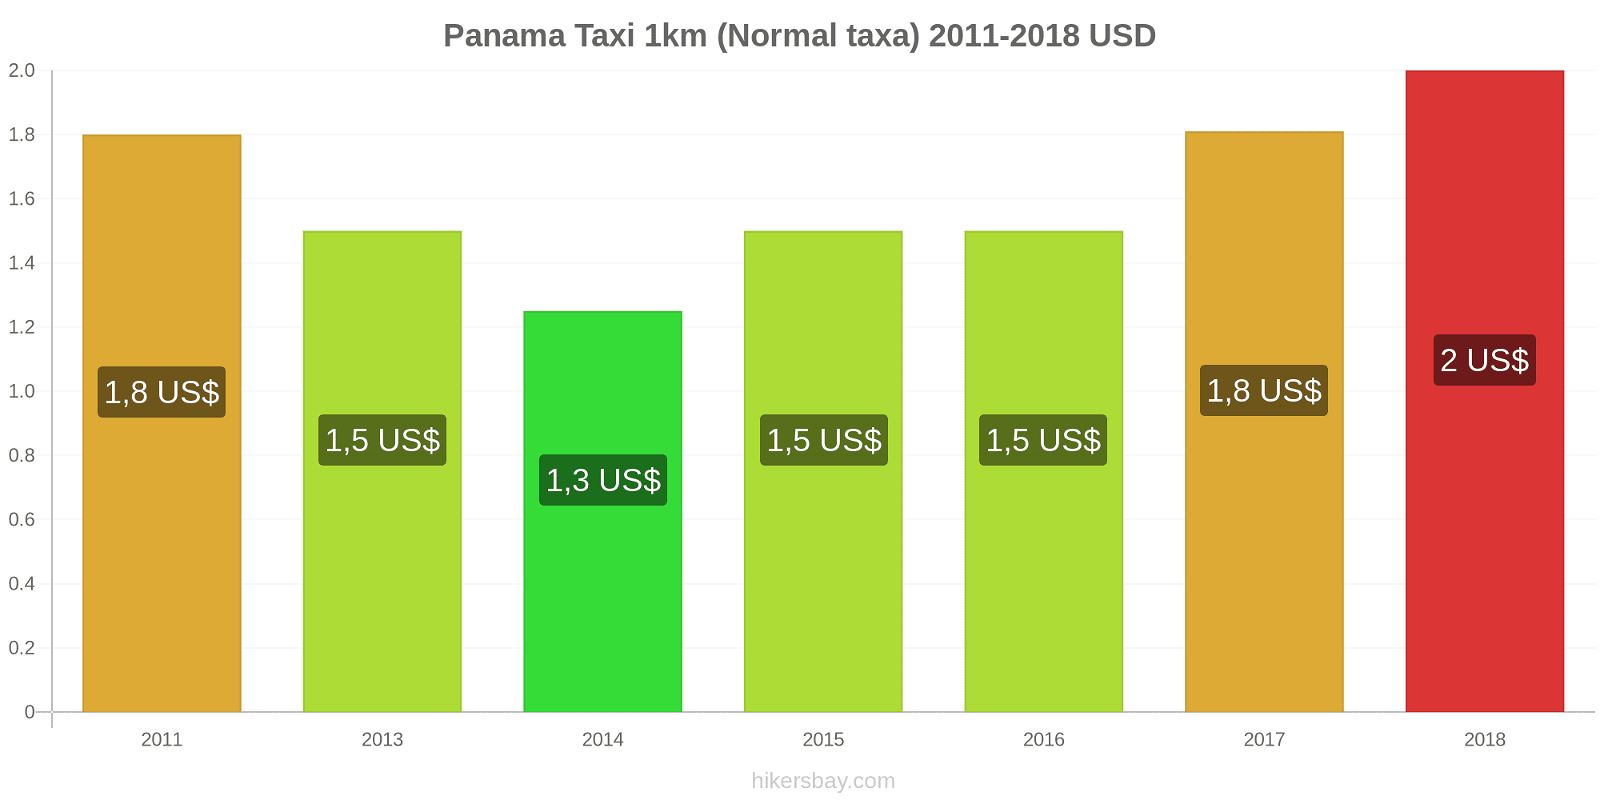 Panama prisändringar Taxi 1km (Normal taxa) hikersbay.com